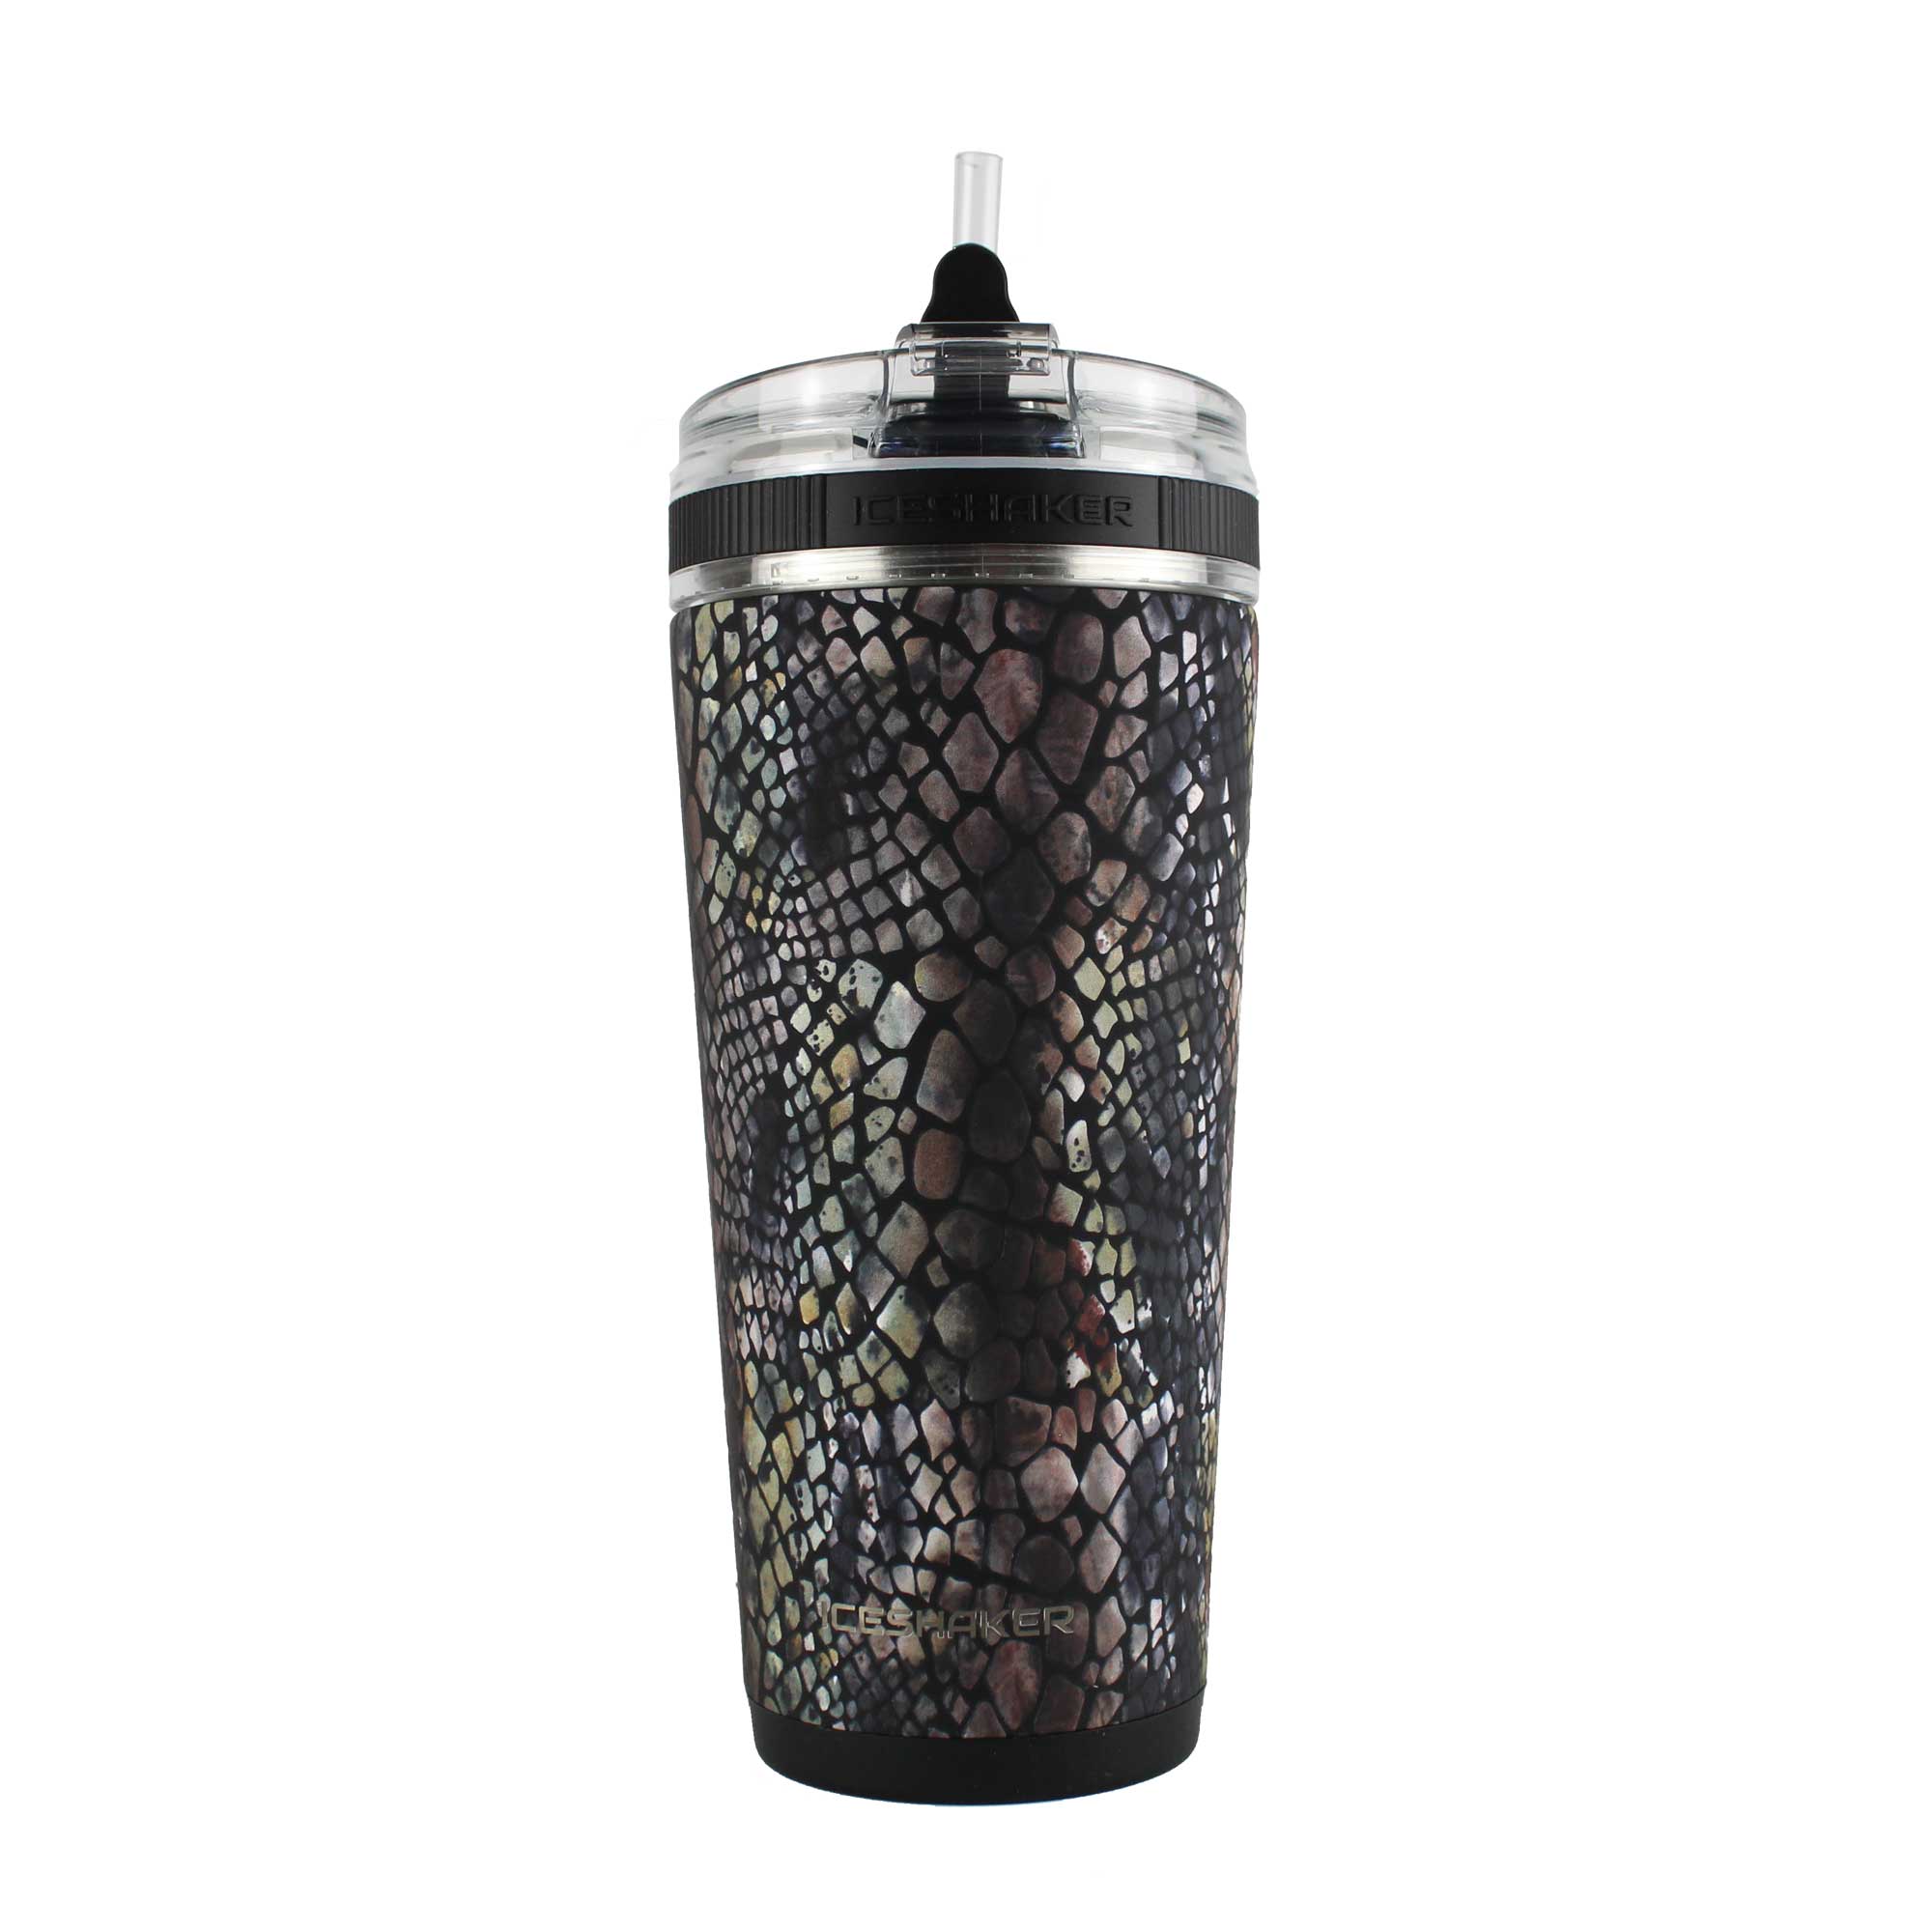 Ice Shaker - 26oz Insulated Flex Bottle - EF OWN IT ALL – Echelon Front